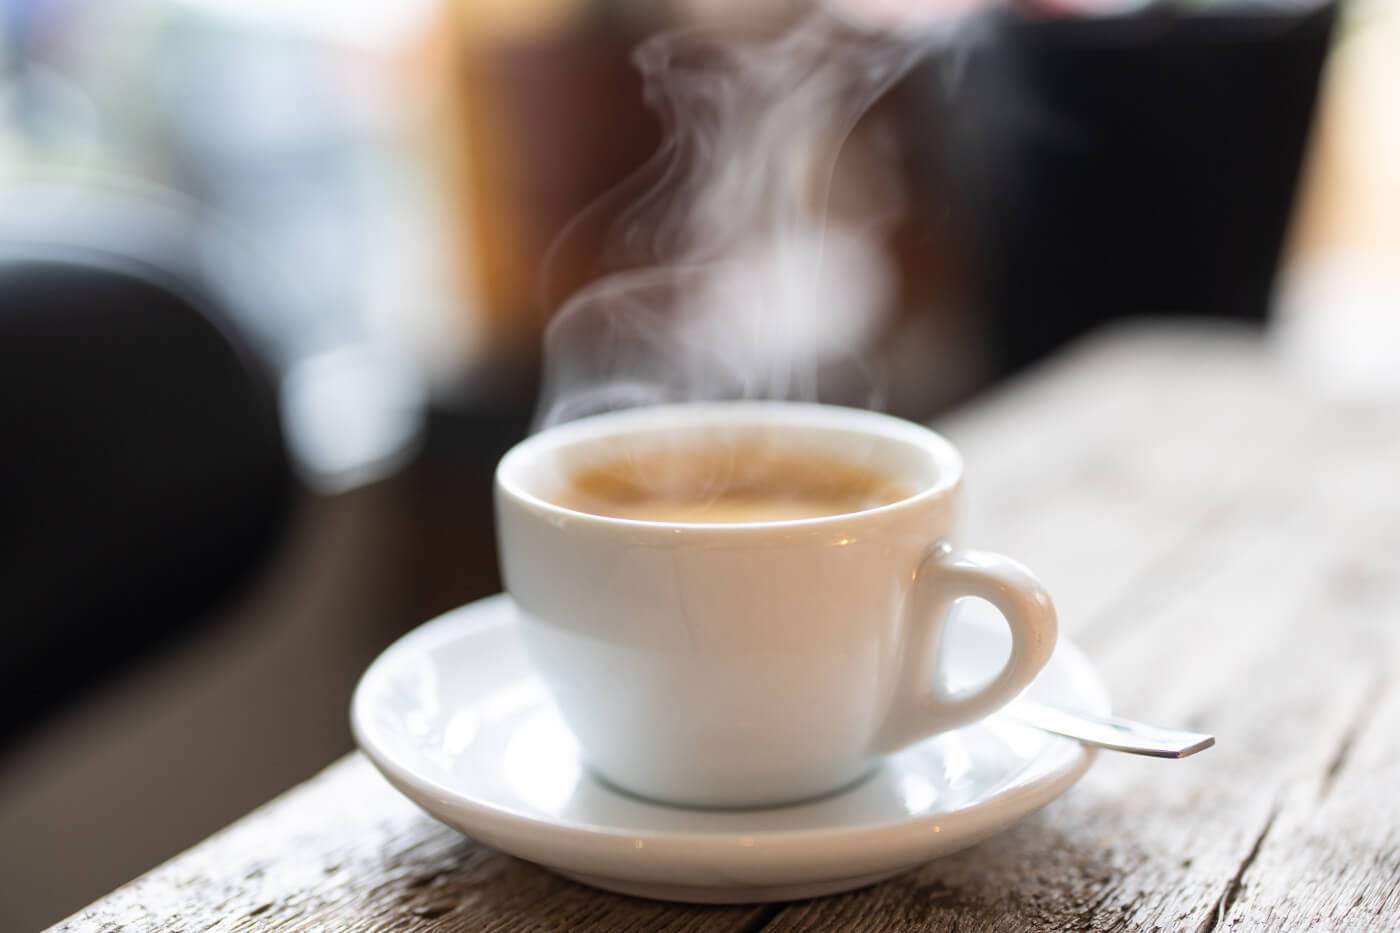 How To: Percolator Coffee — Sparkplug Coffee